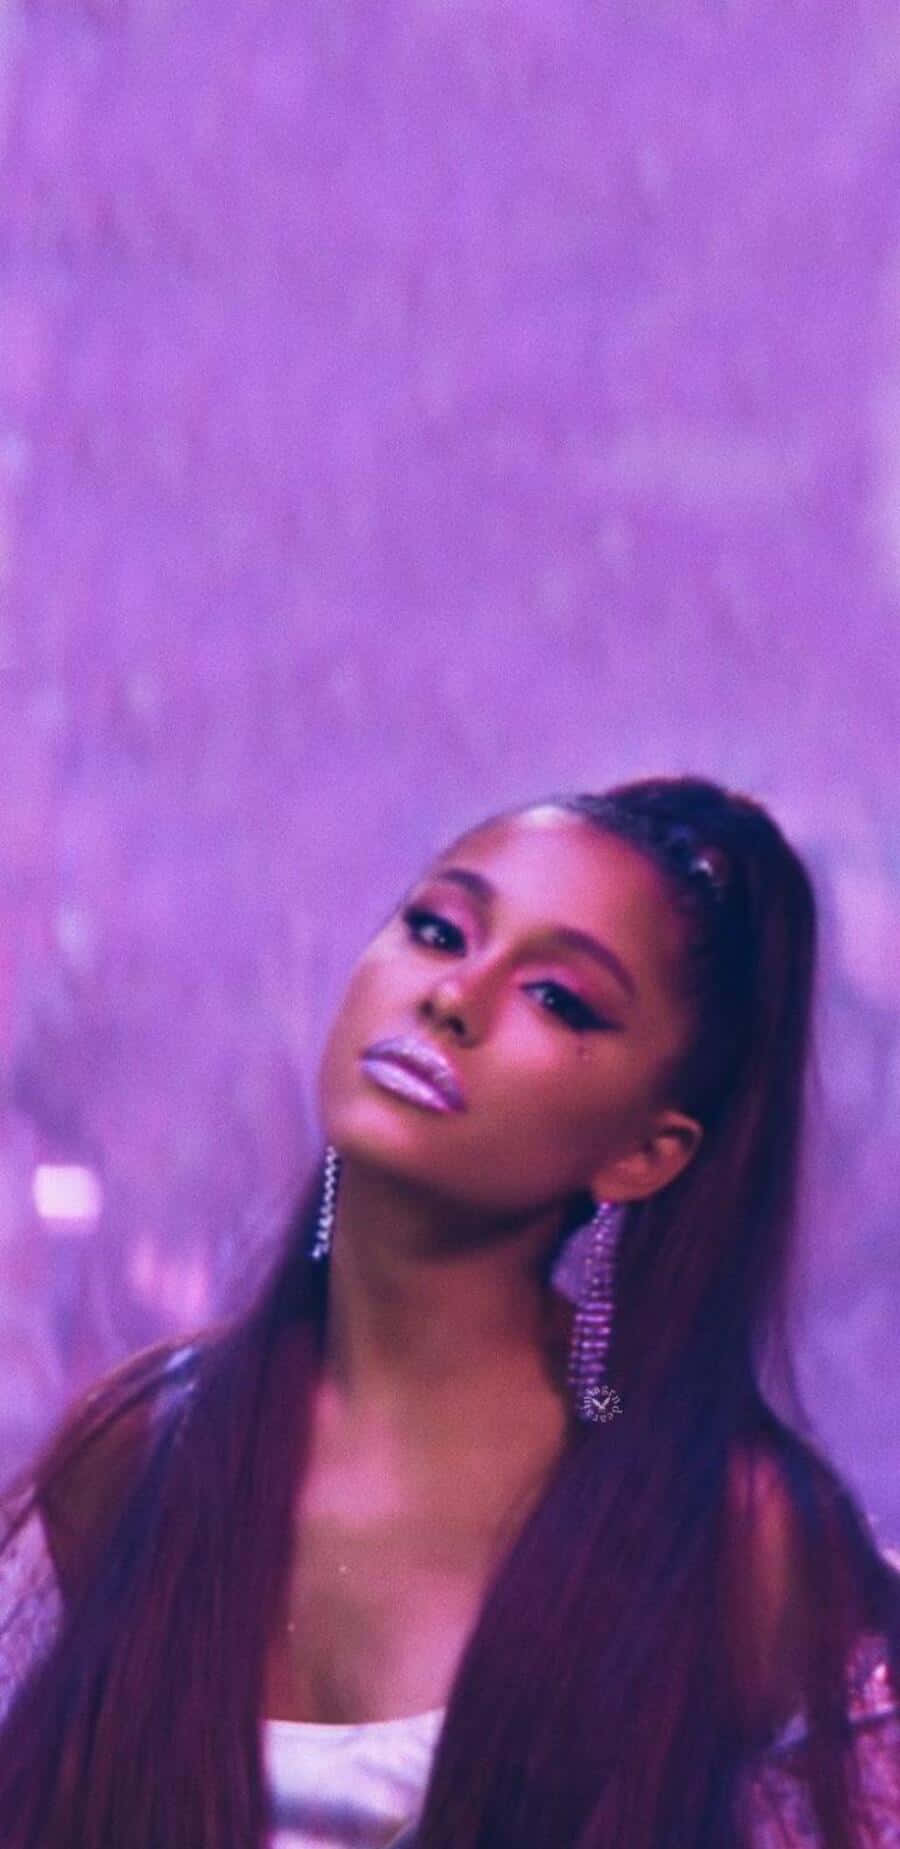 Dazzling Ariana Grande - Aesthetic Perfection Wallpaper